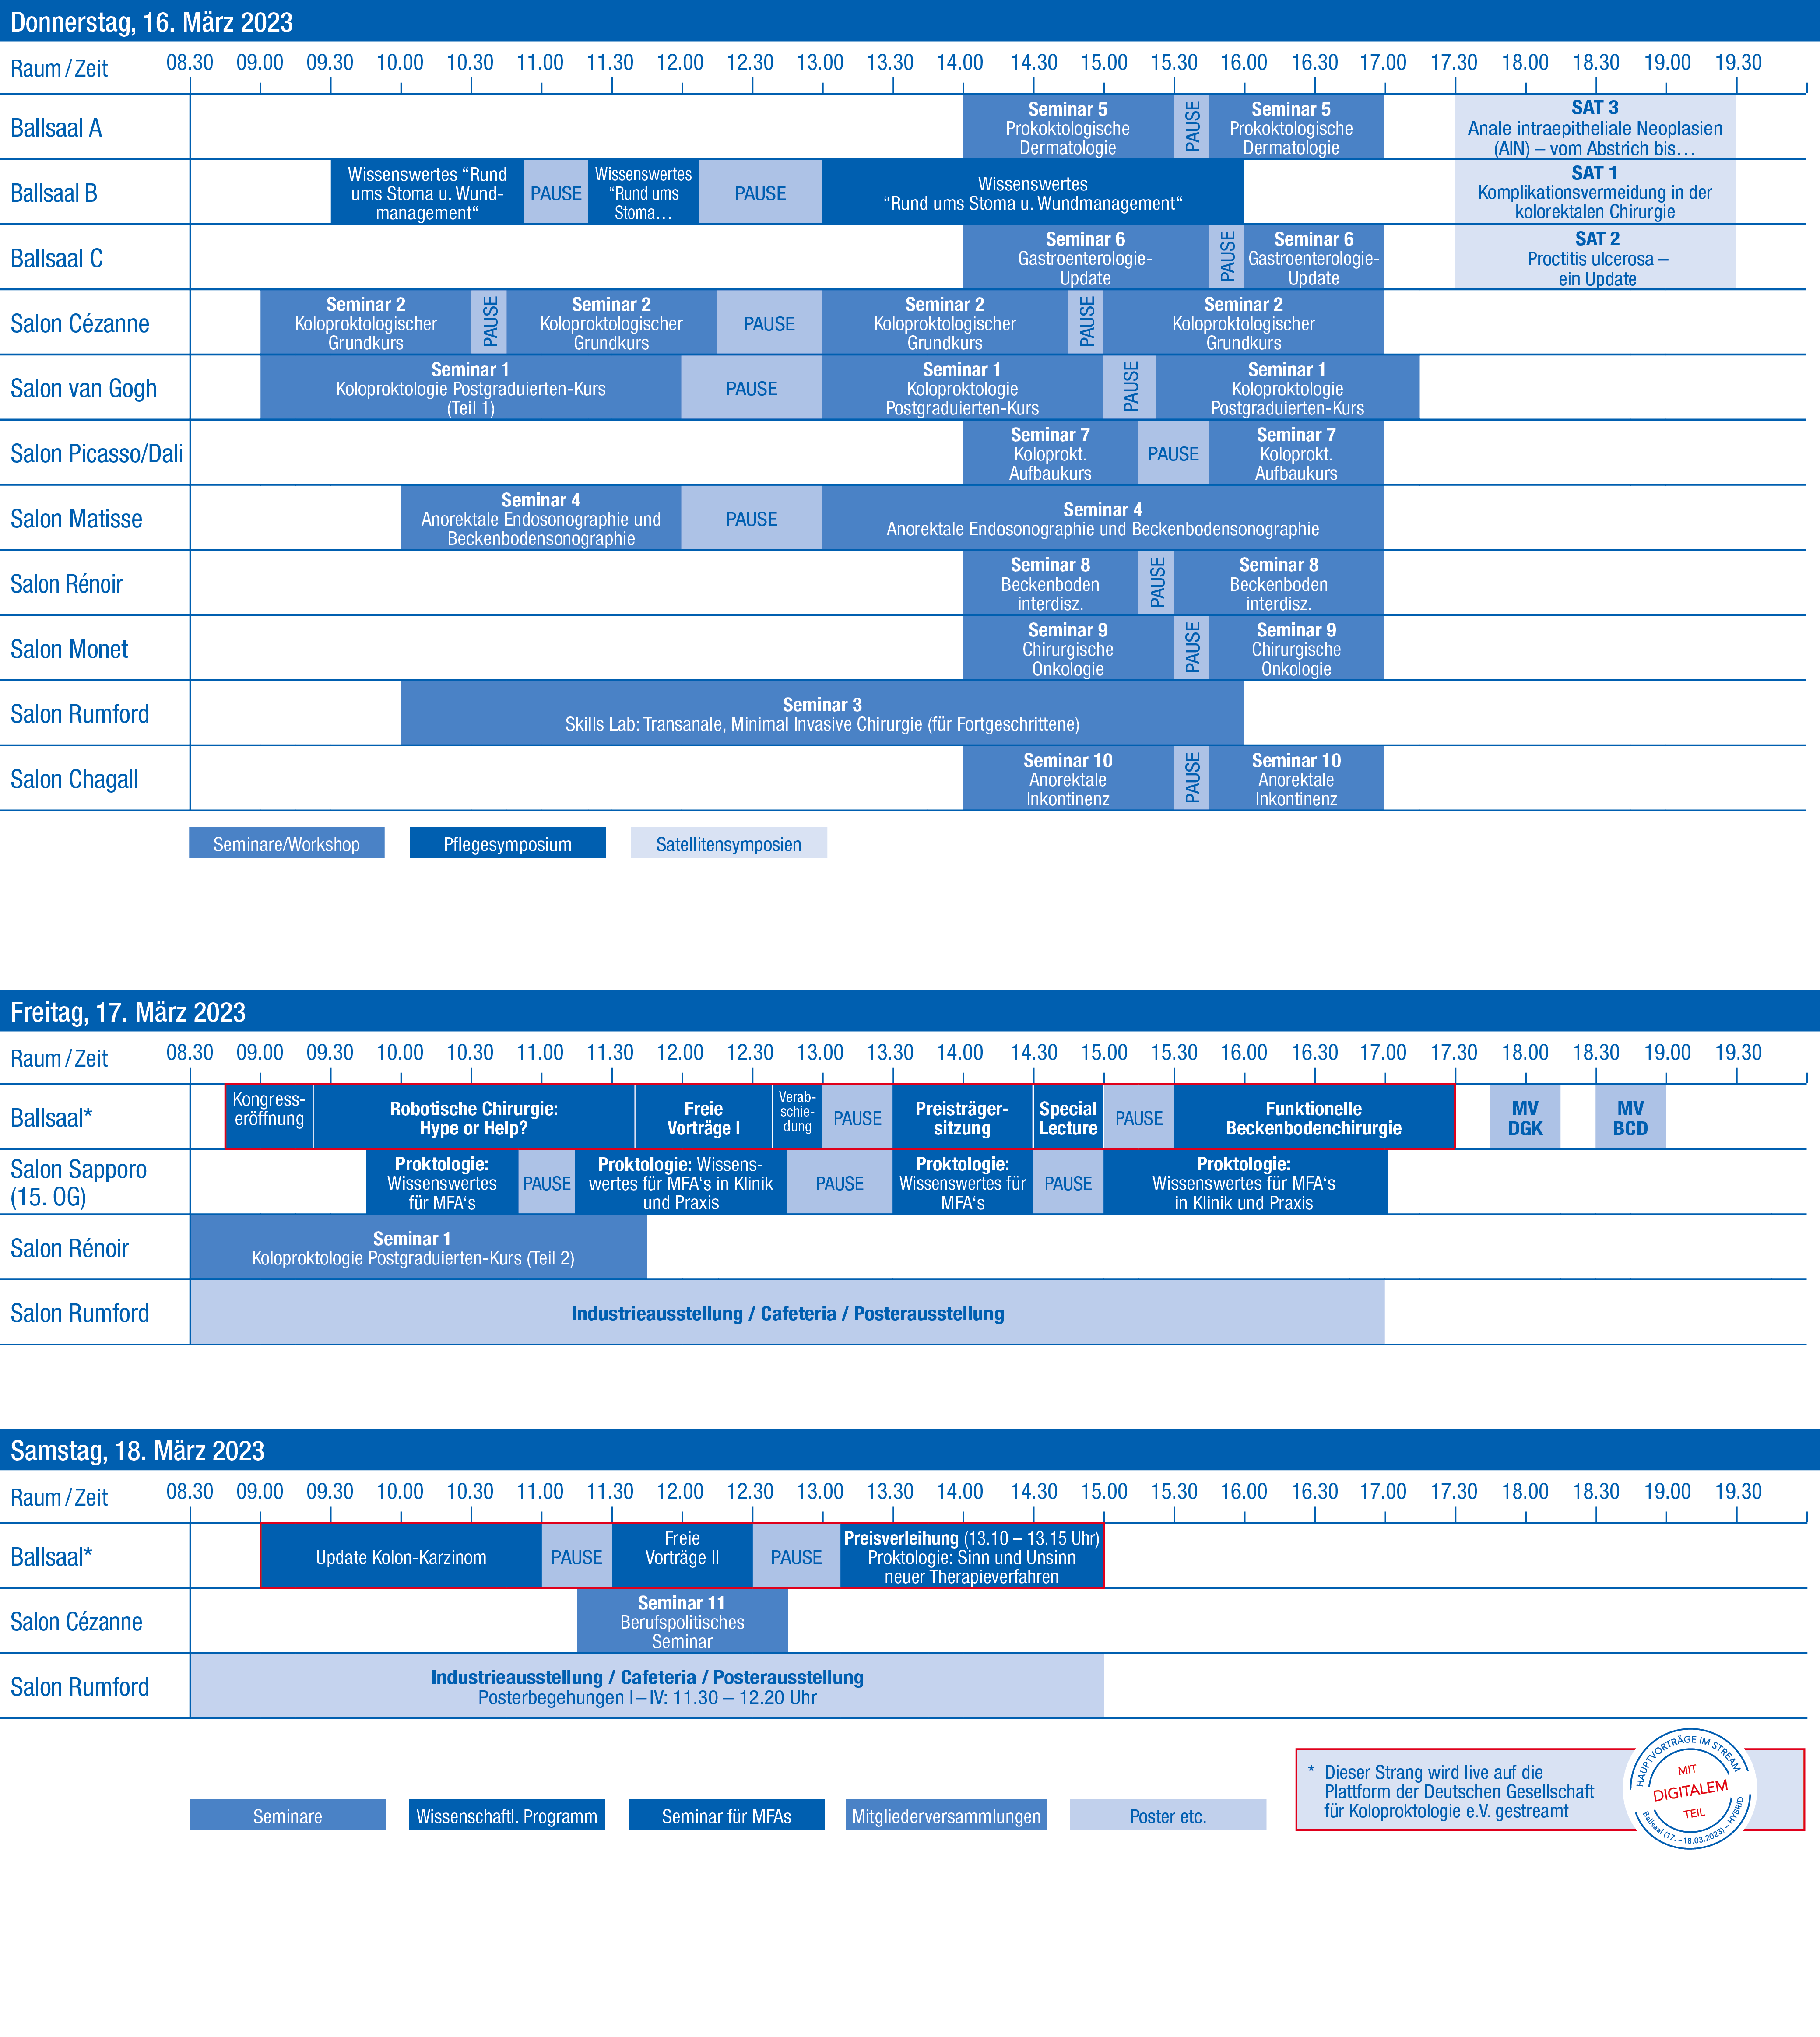 DGK 2023 Timetable